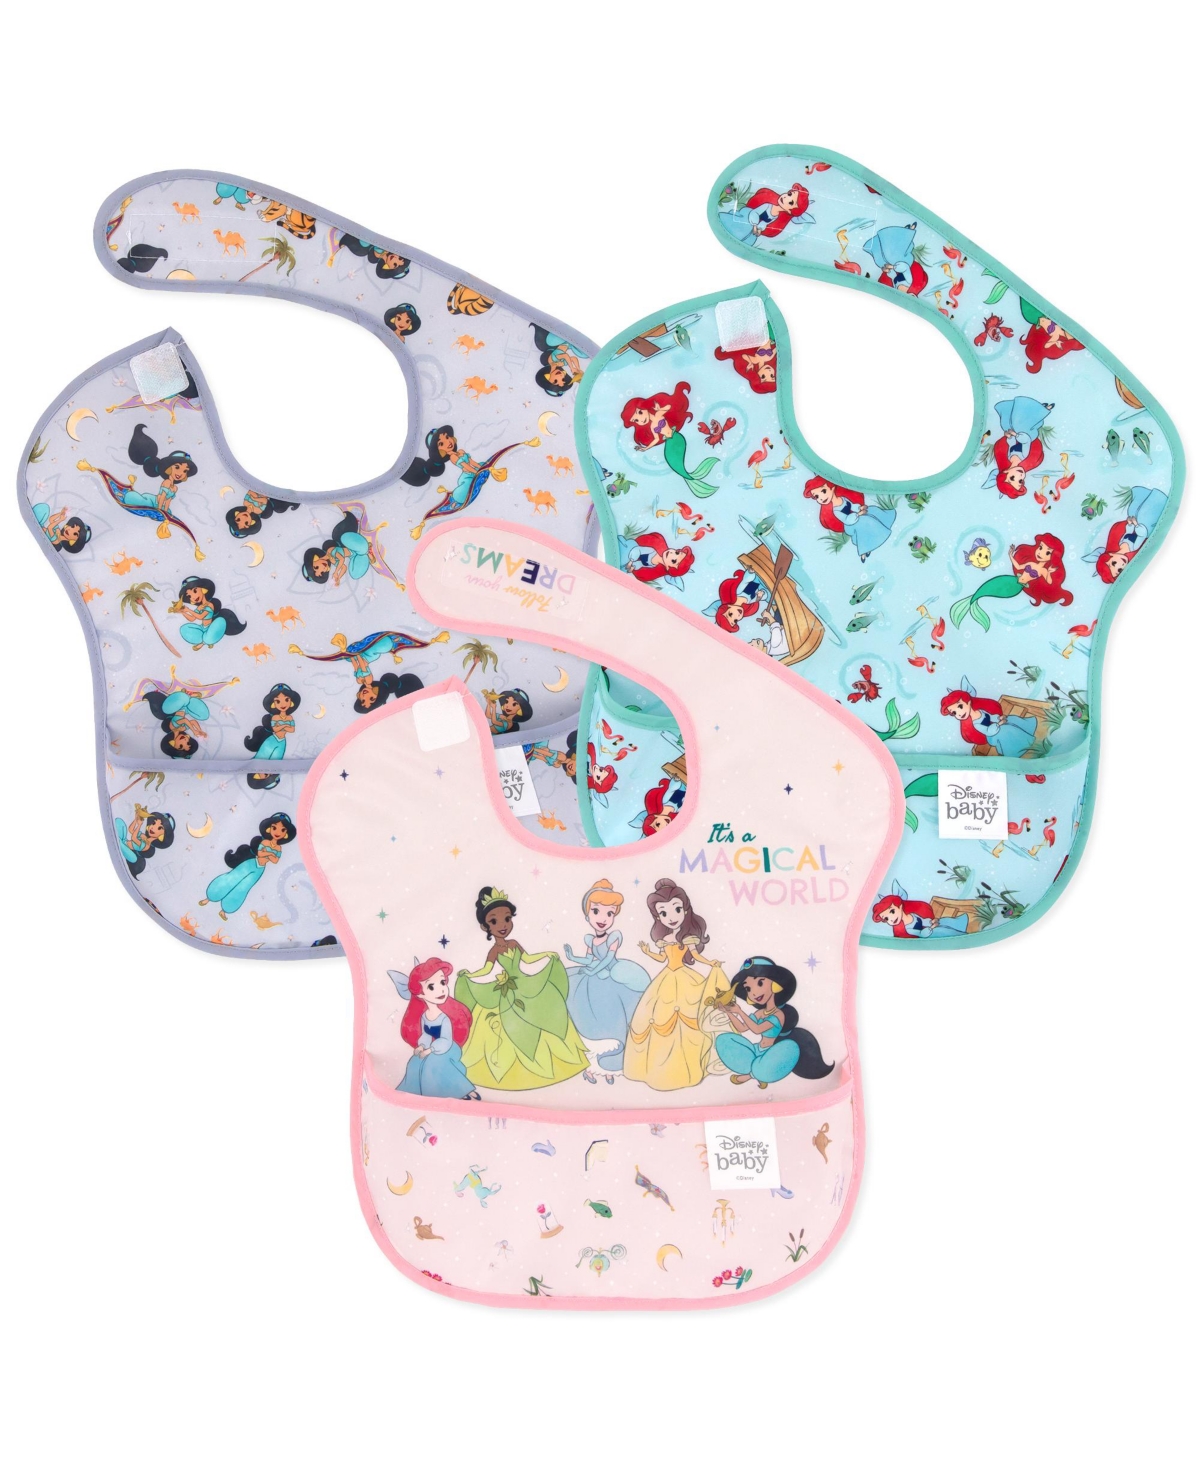 Bumkins 3-pack Superbib Waterproof Baby Bibs In Princess Magical World/ariel/jasmine